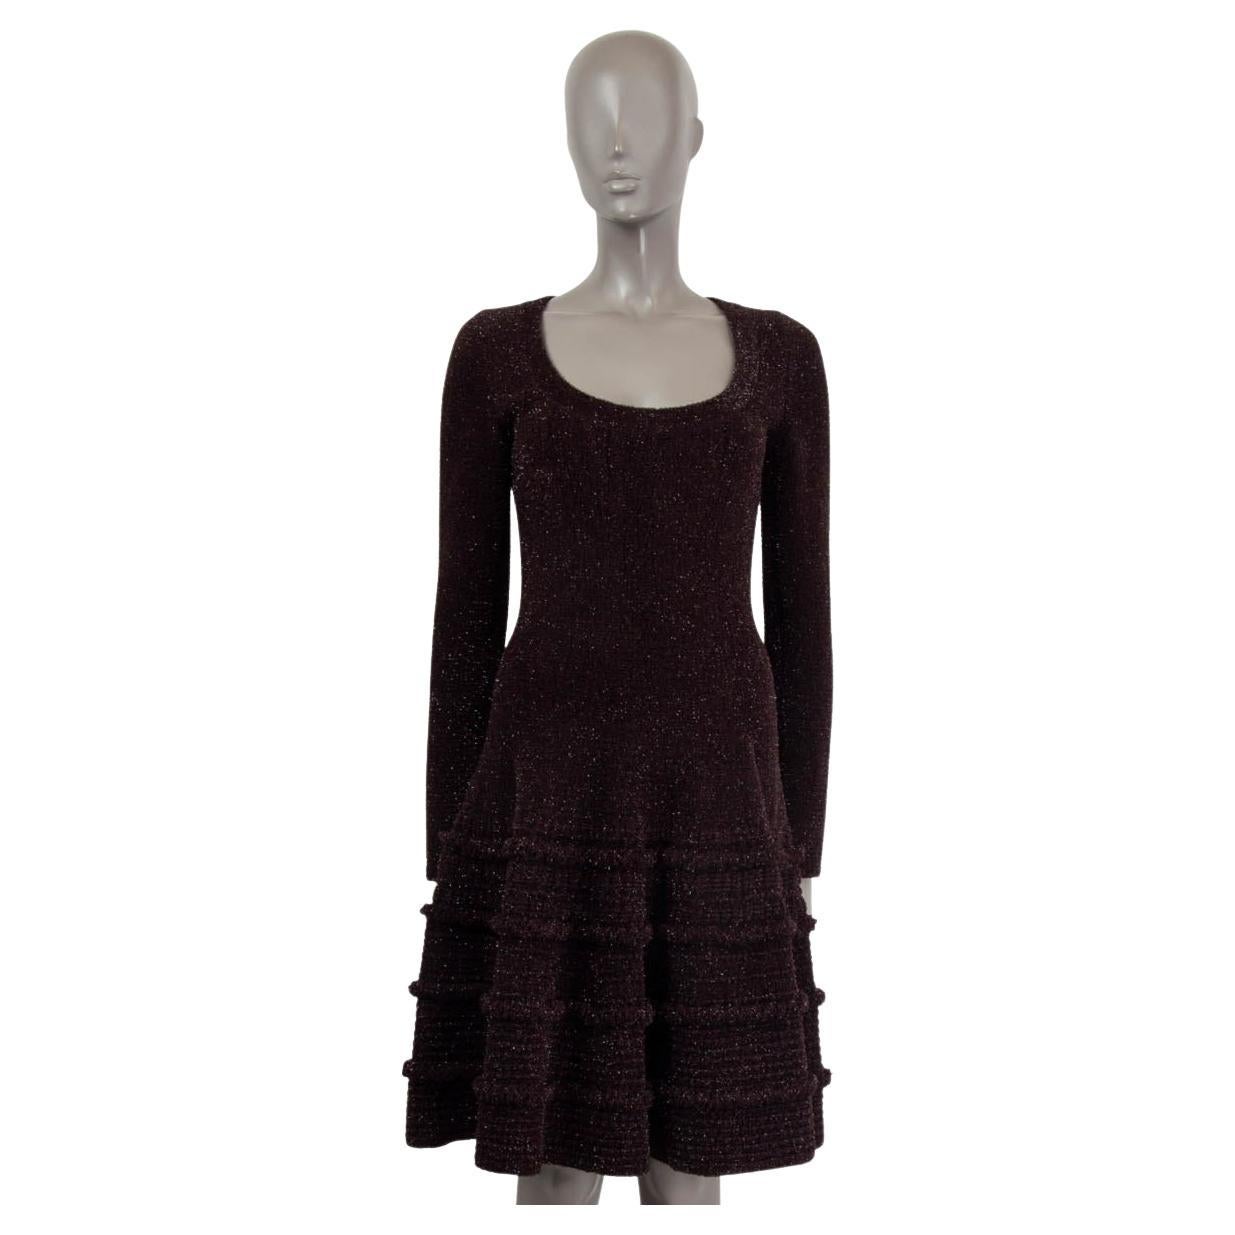 ALAIA dark brown wool blend RUFFLED LUREX KNIT Dress 42 L For Sale